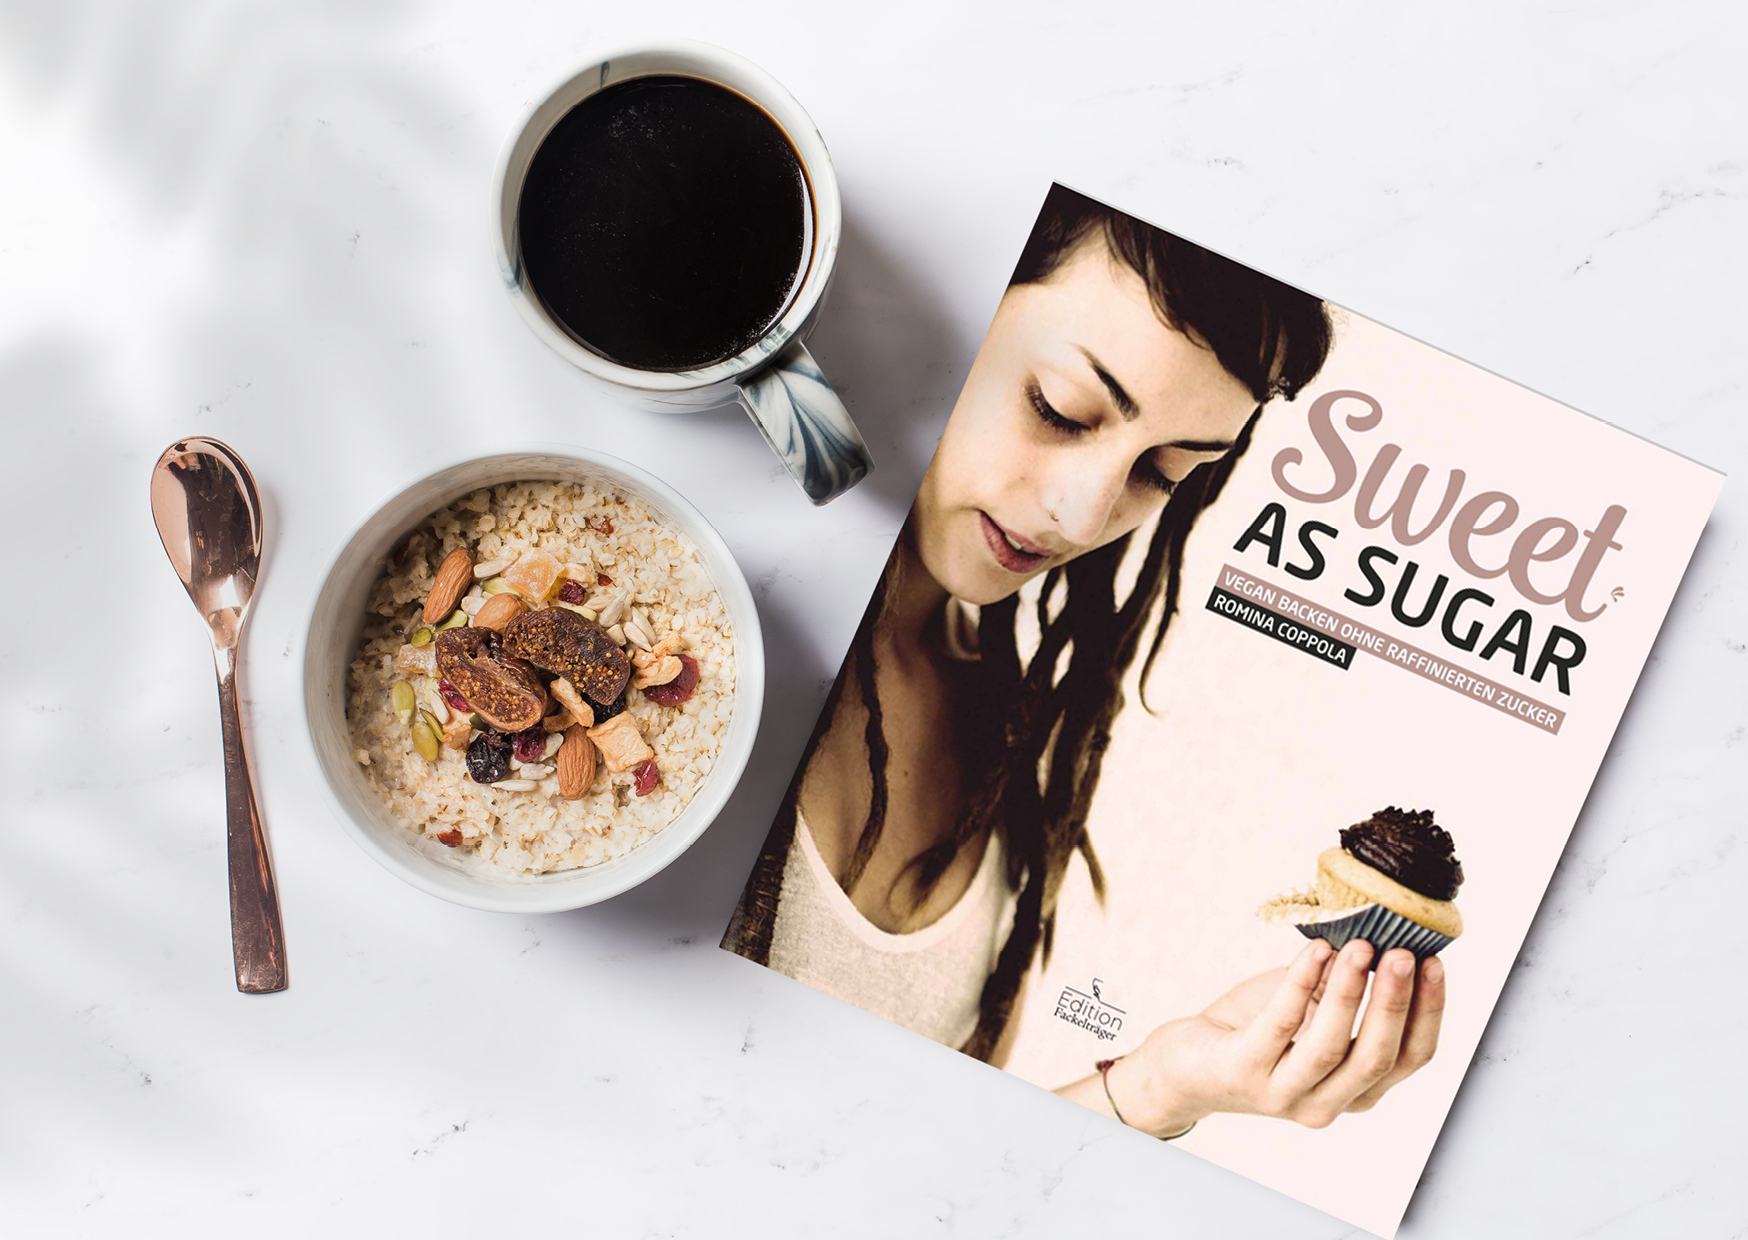 As sugar sweet Sweet addiction: